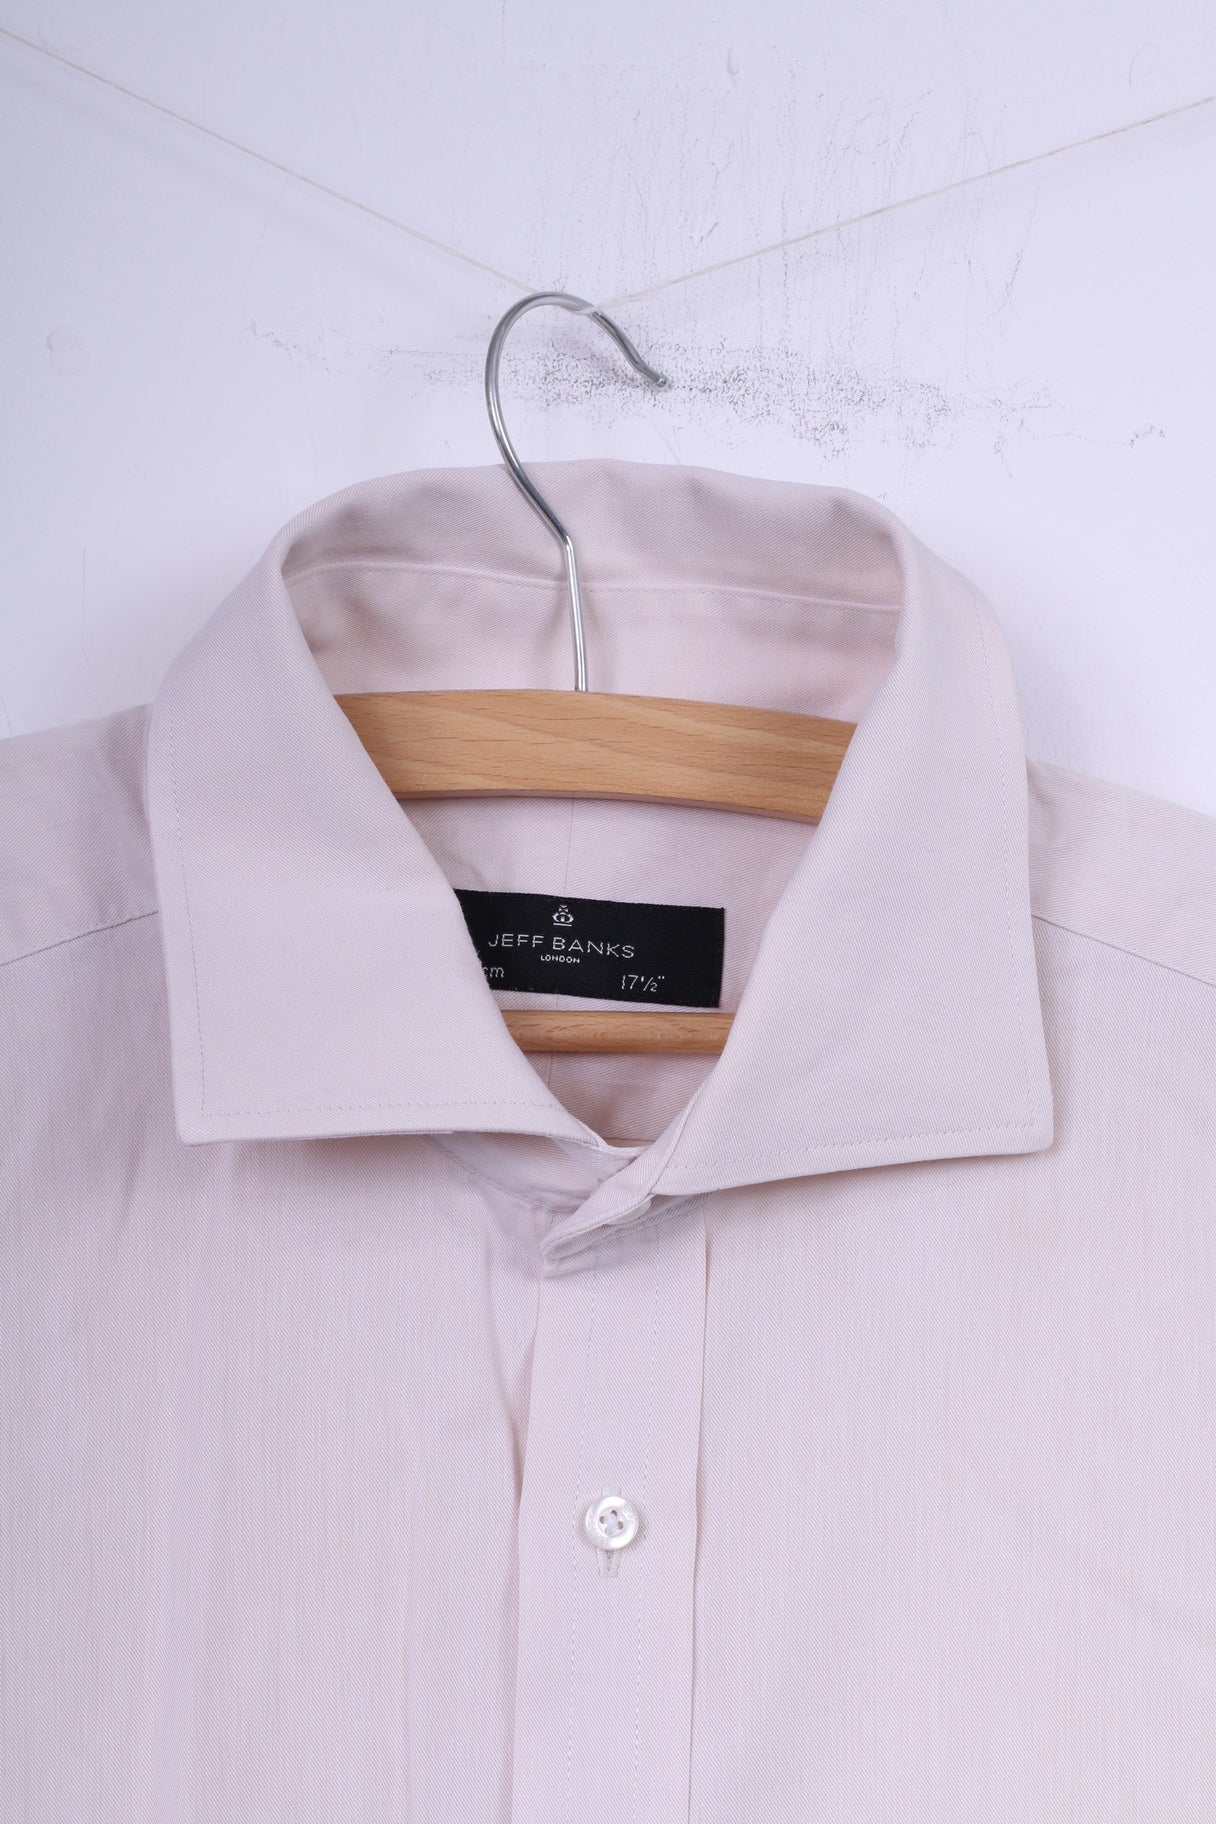 Jeff Banks London Mens 44 17.5'' XL Casual Shirt Cotton Cream Long Sleeve